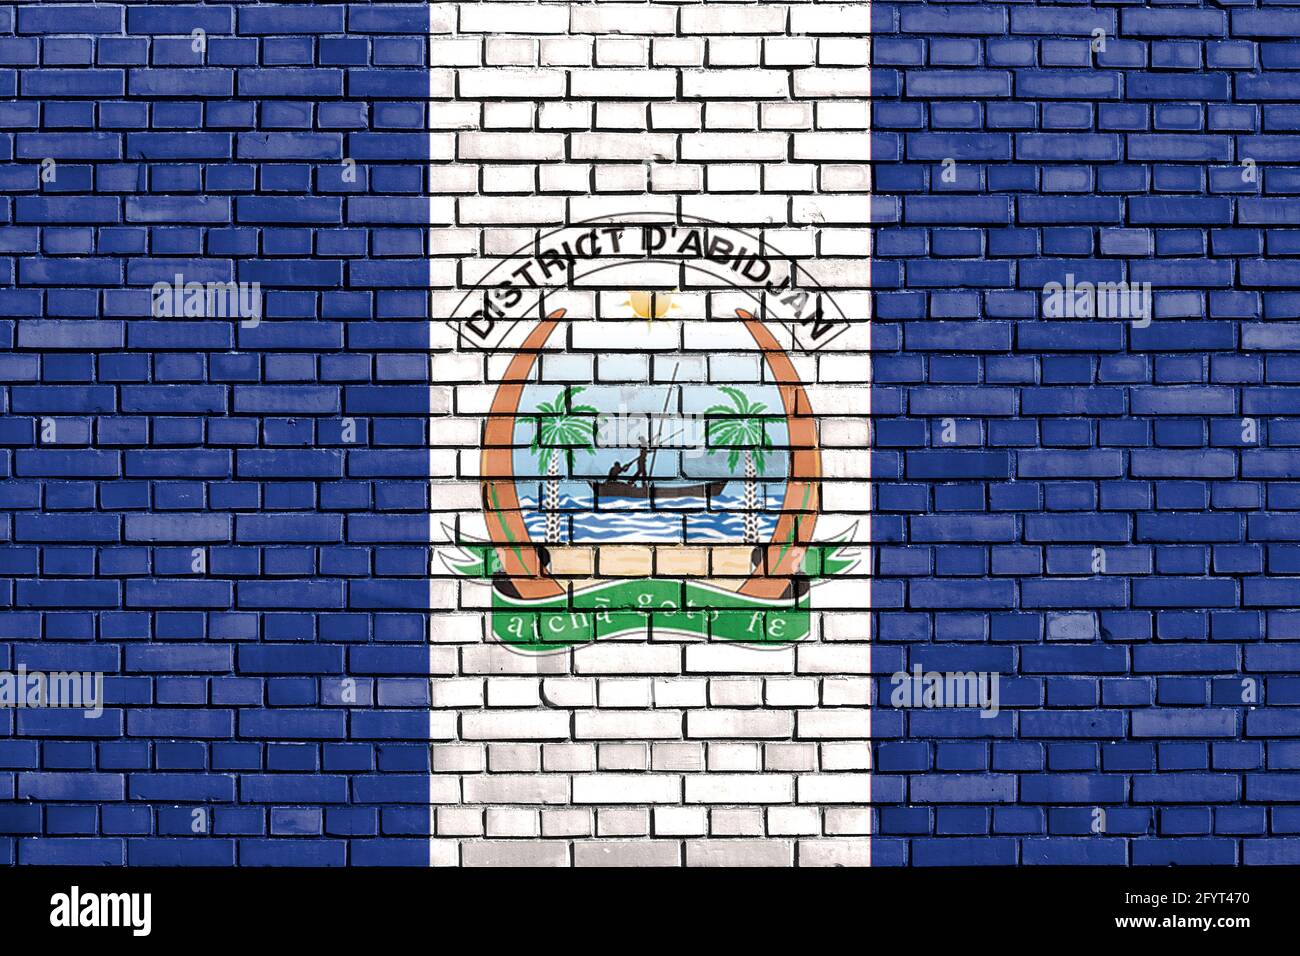 flag of Abidjan, Ivory Coast painted on brick wall Stock Photo